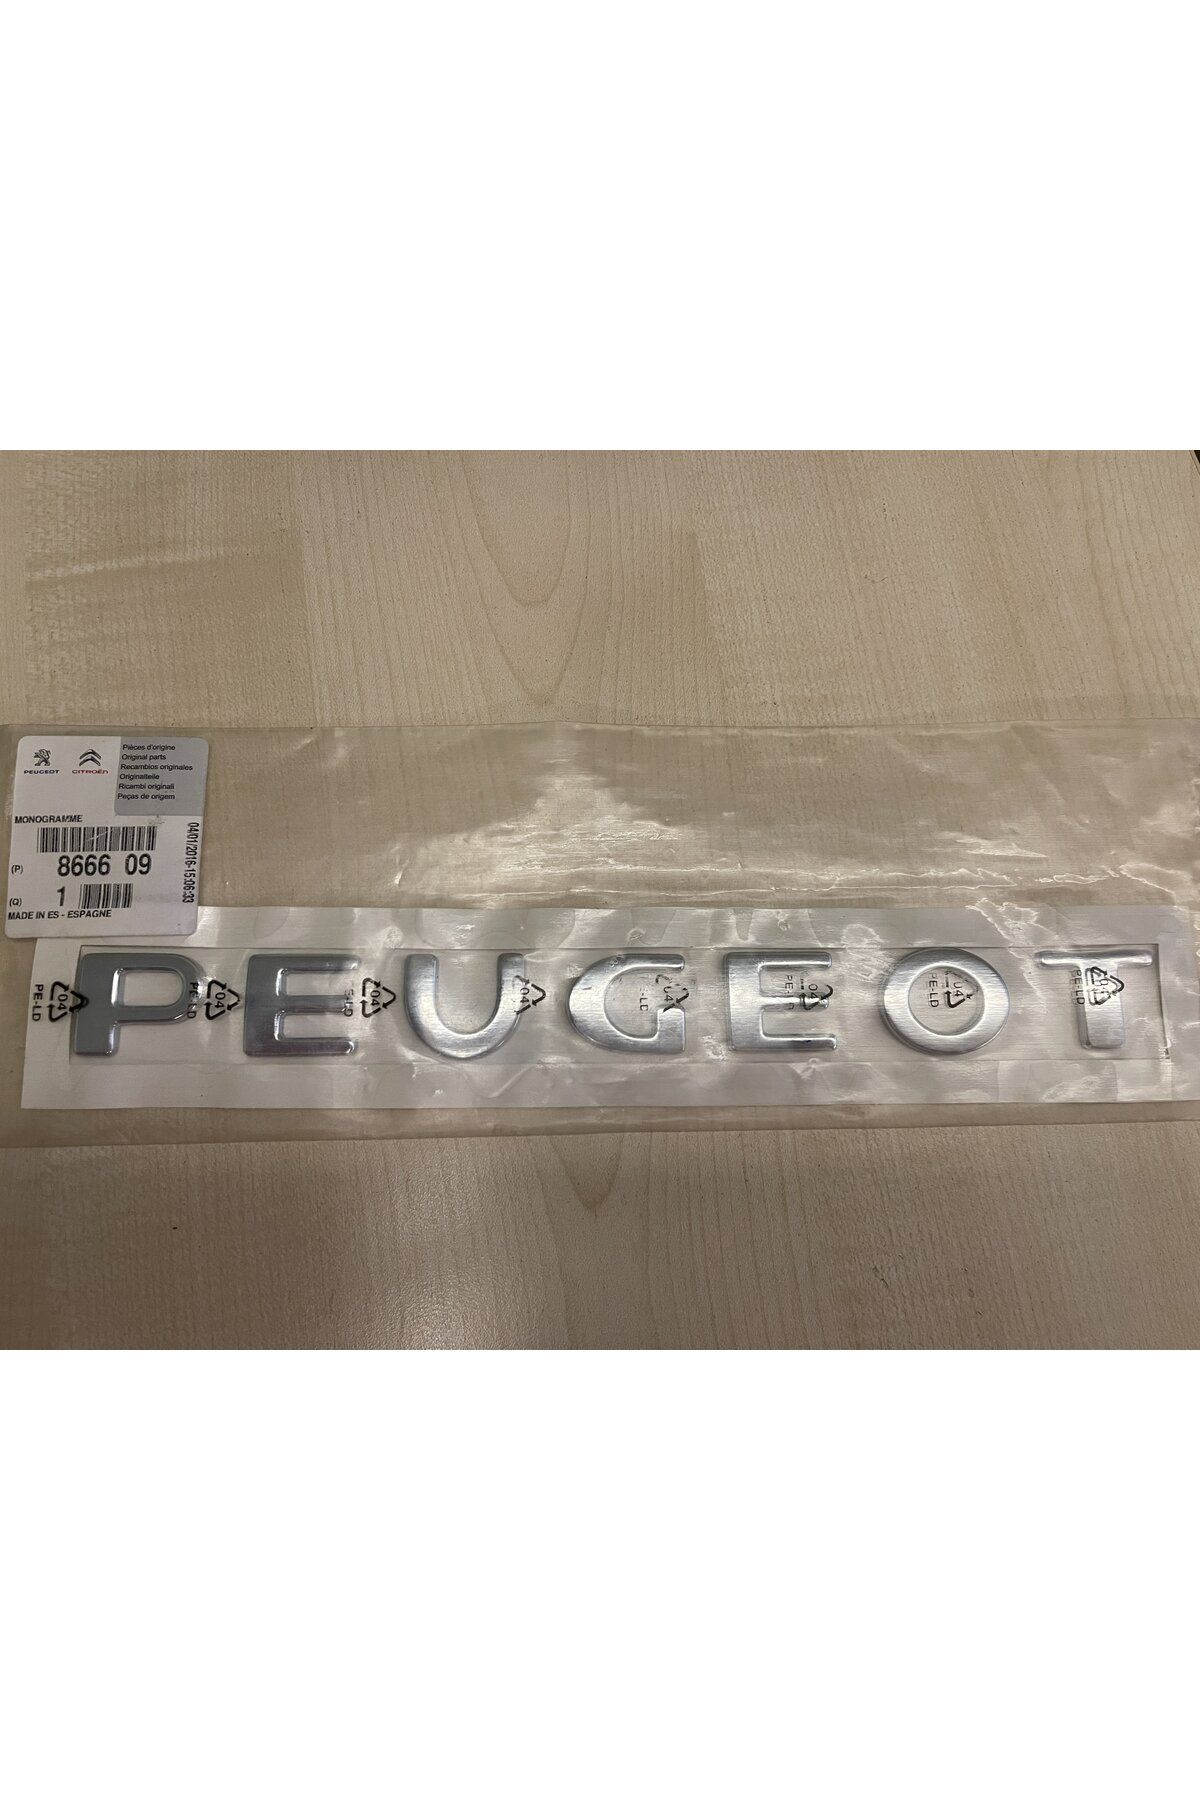 Peugeot Partner tepee, PEUGEOT Yazı Çift Bagaj OEM (8666.09)